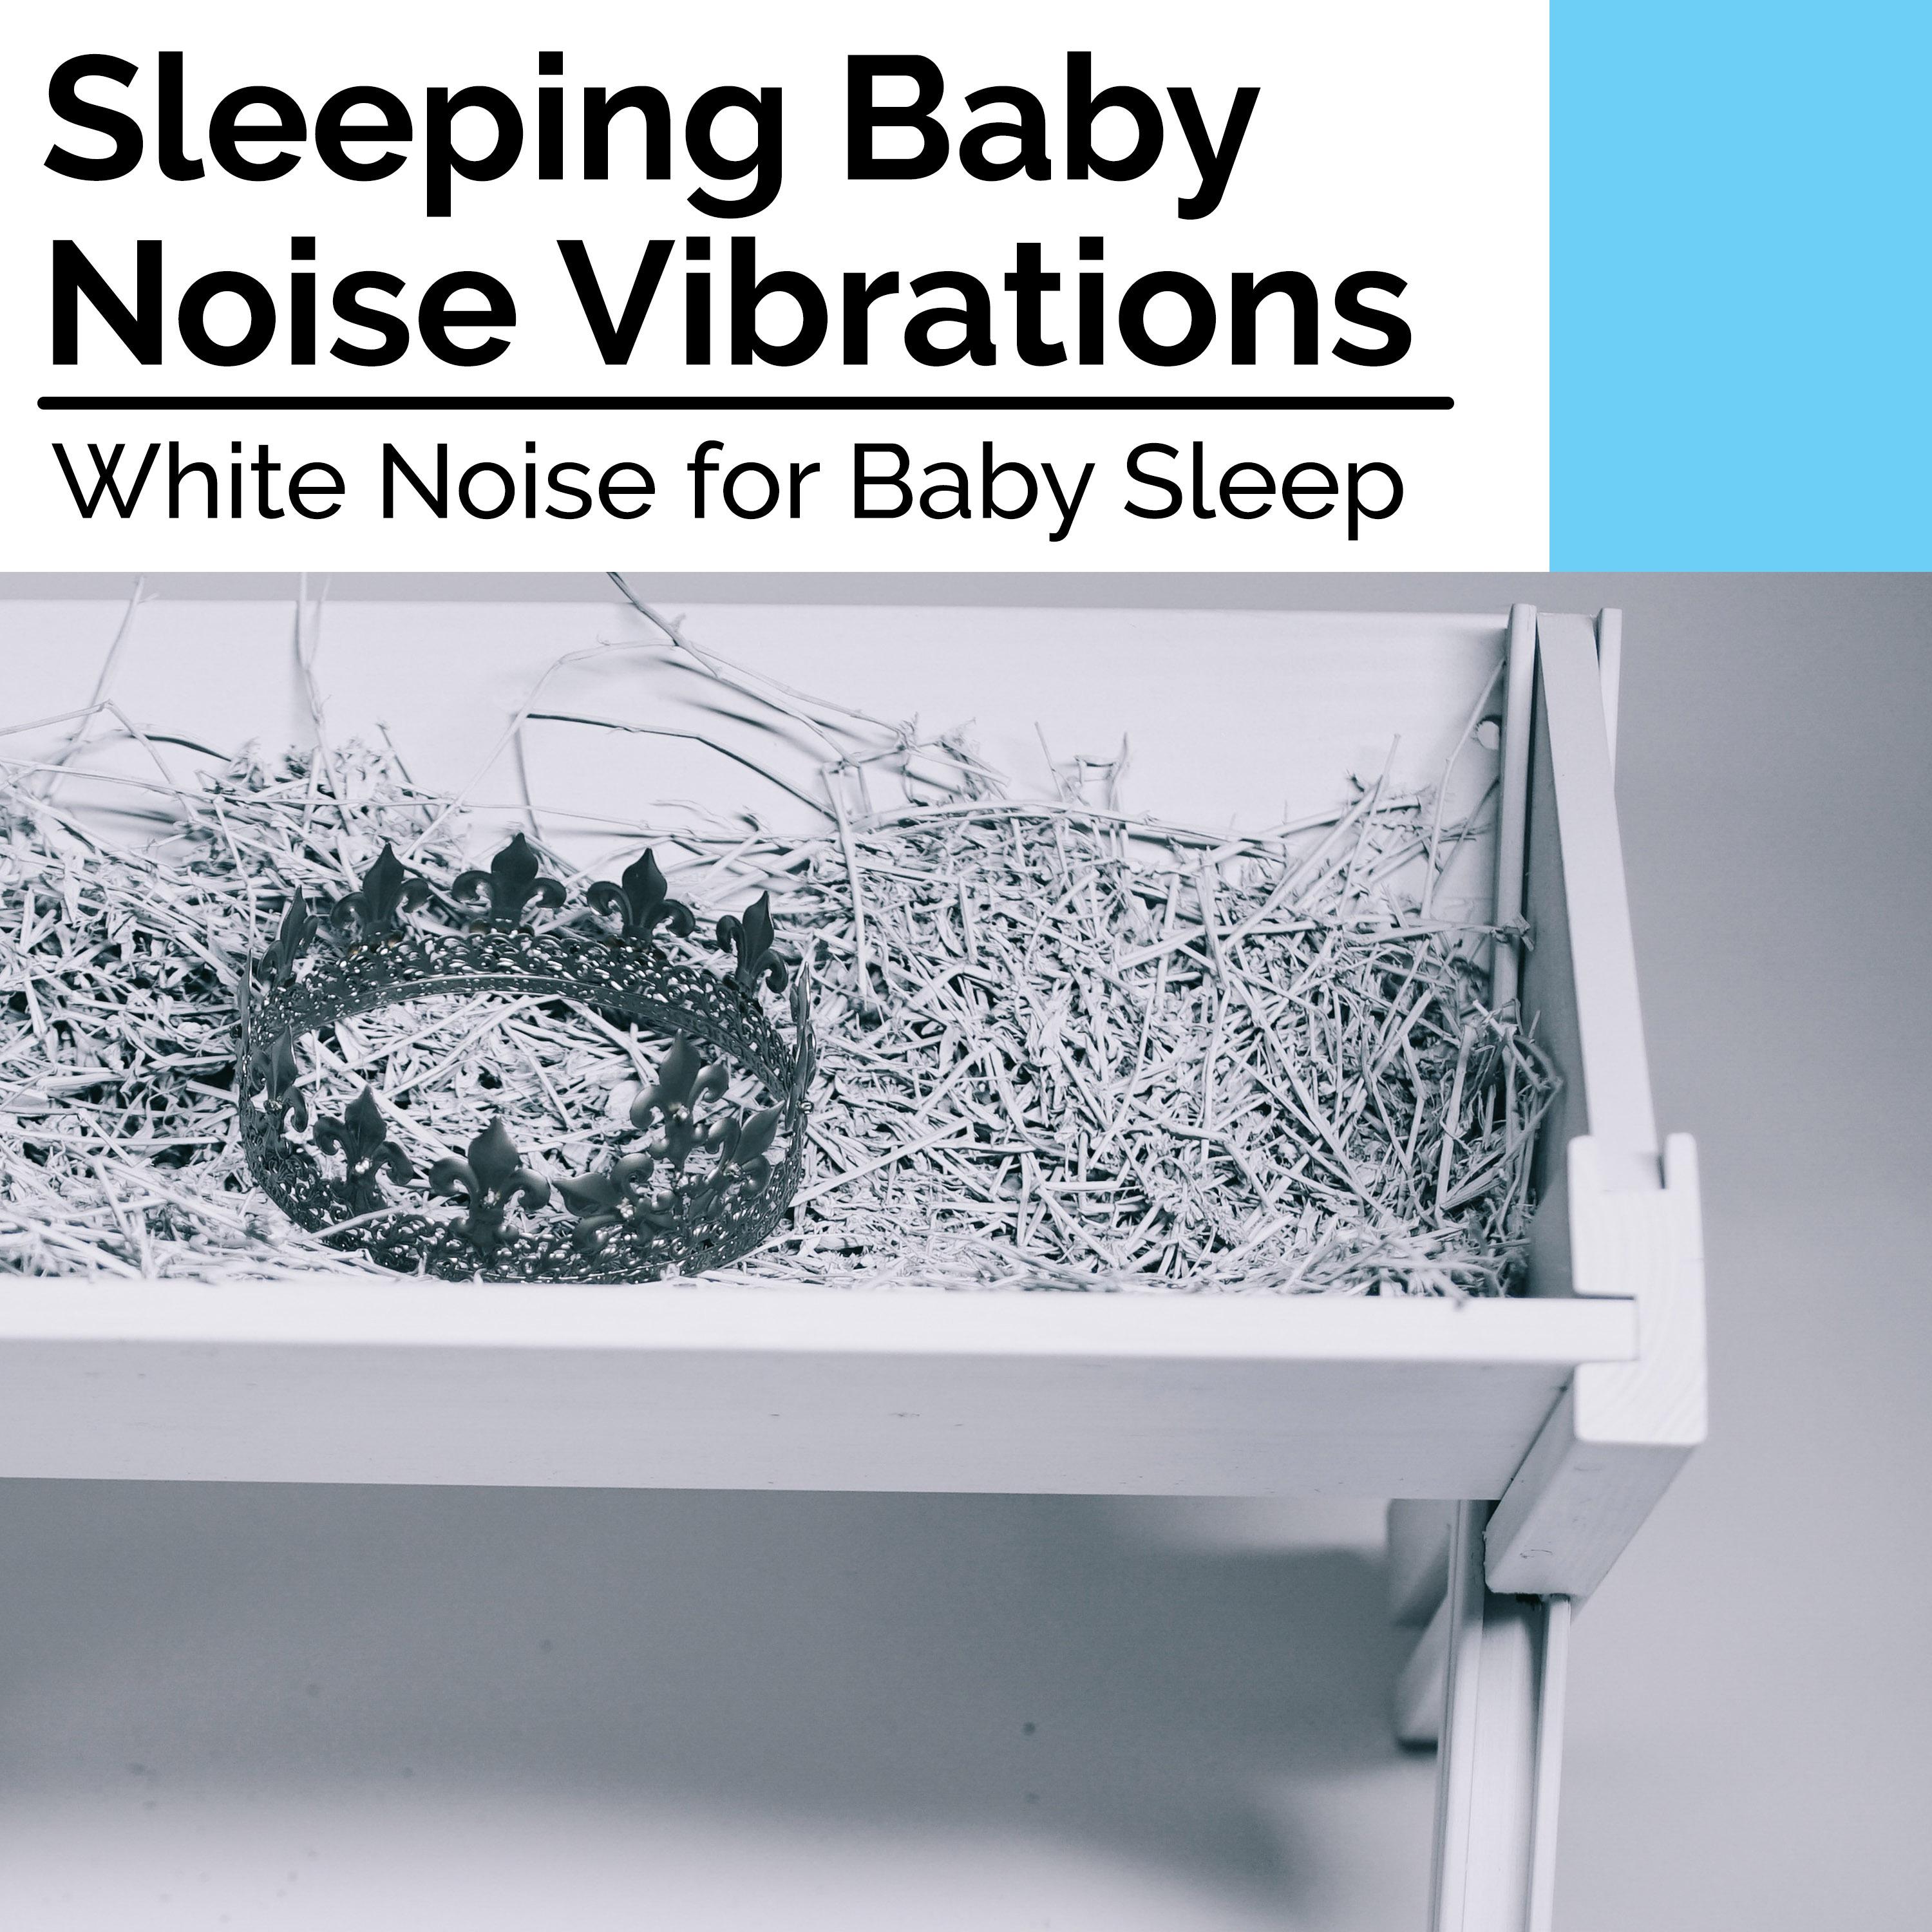 Sleeping Baby Noise Vibrations